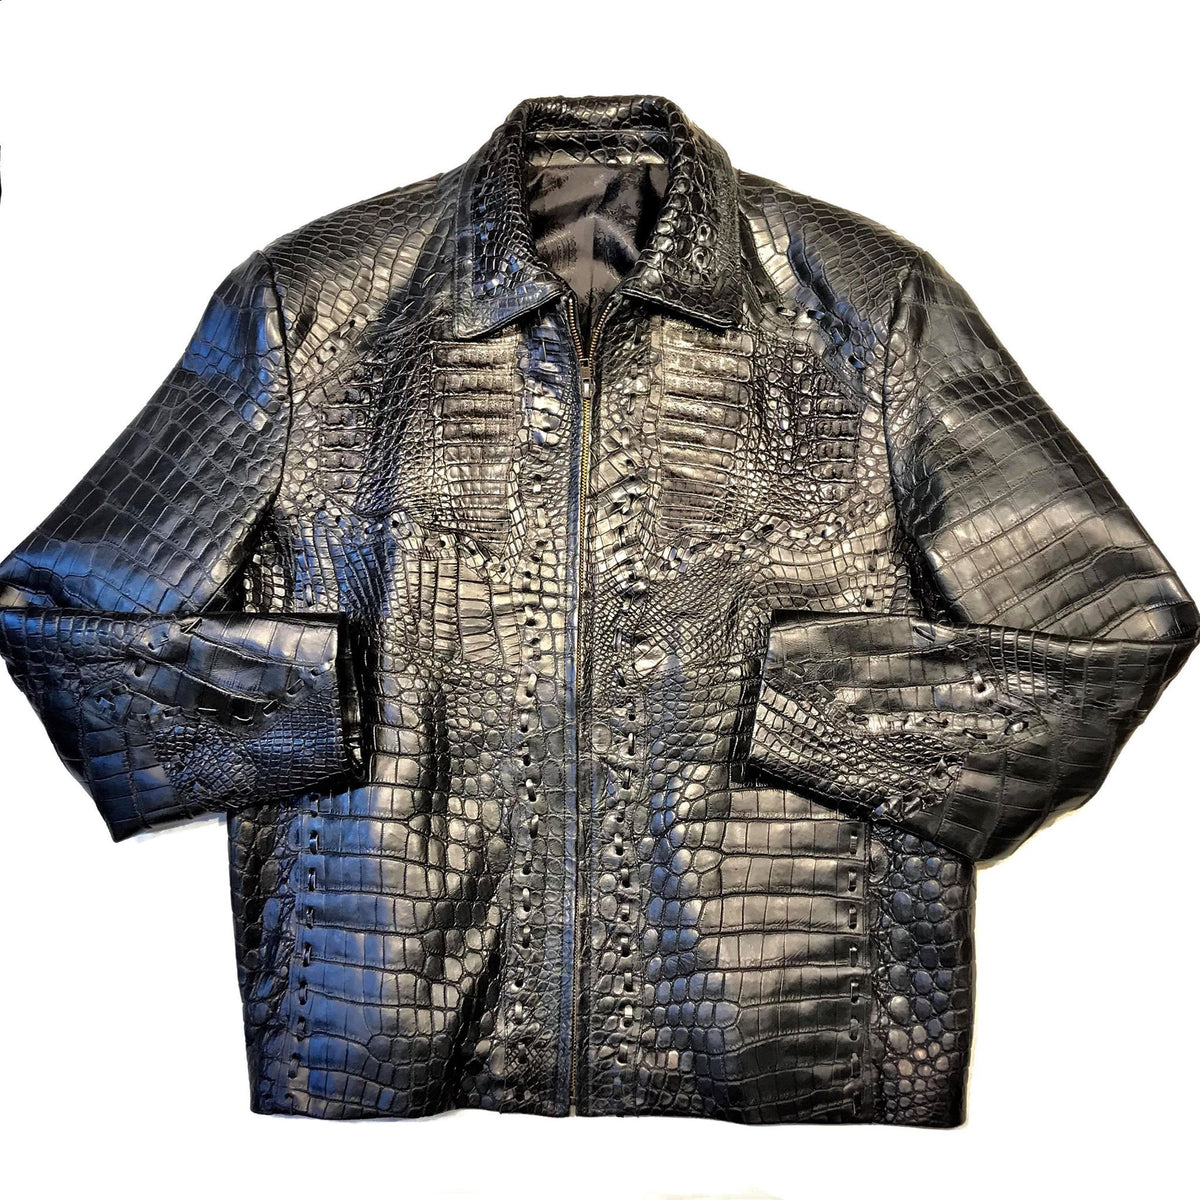 alligator crocodile leather jacket